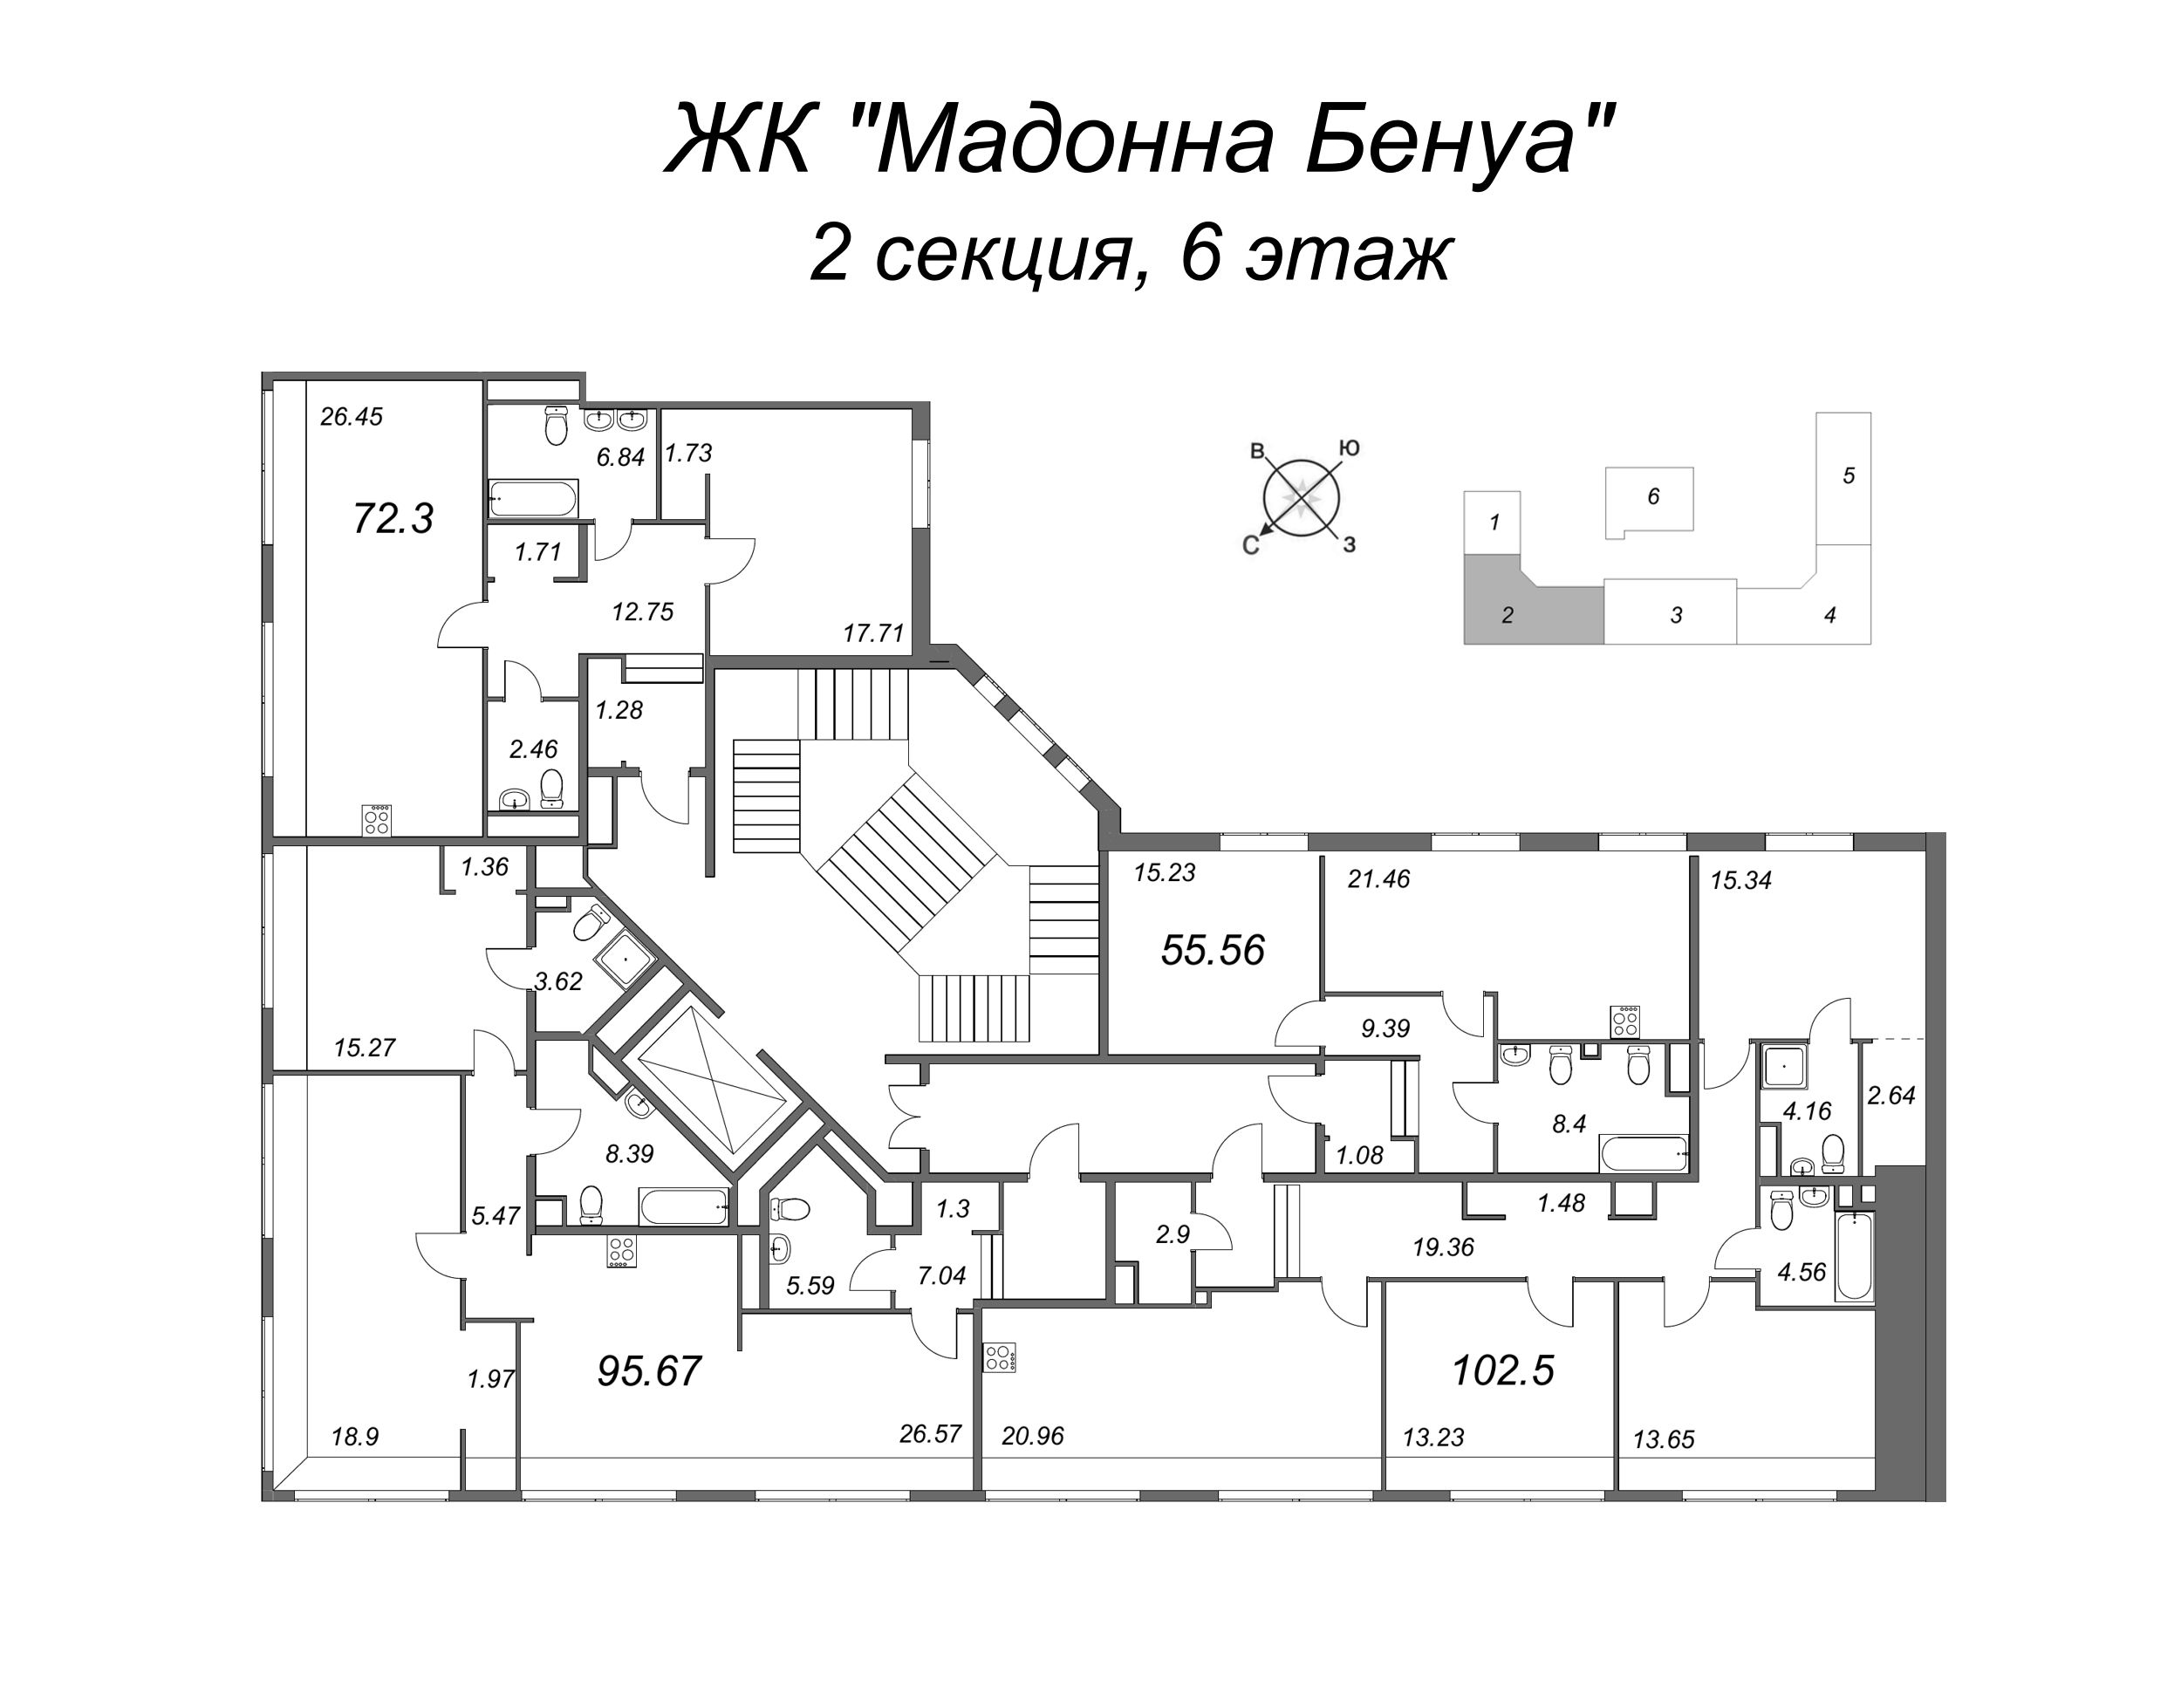 4-комнатная (Евро) квартира, 105.9 м² - планировка этажа